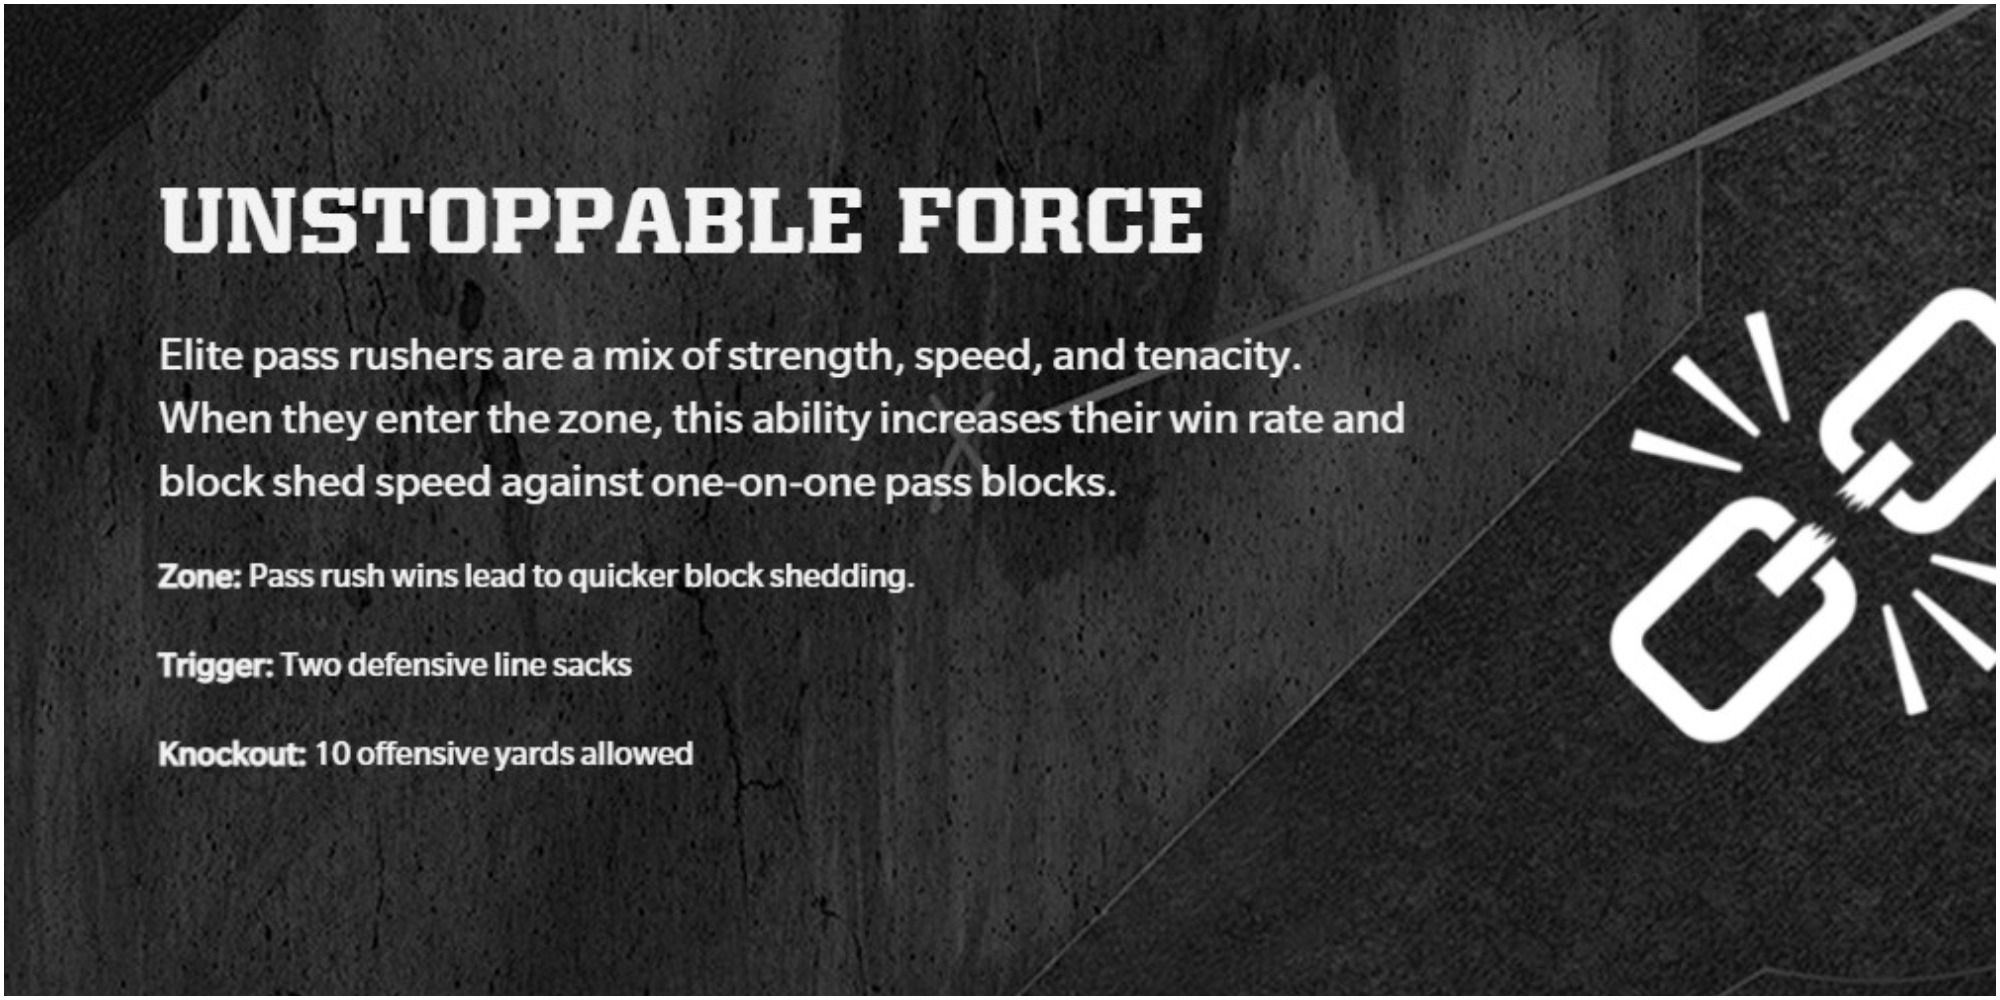 Madden NFL 22 Unstoppable Force Description On The Website